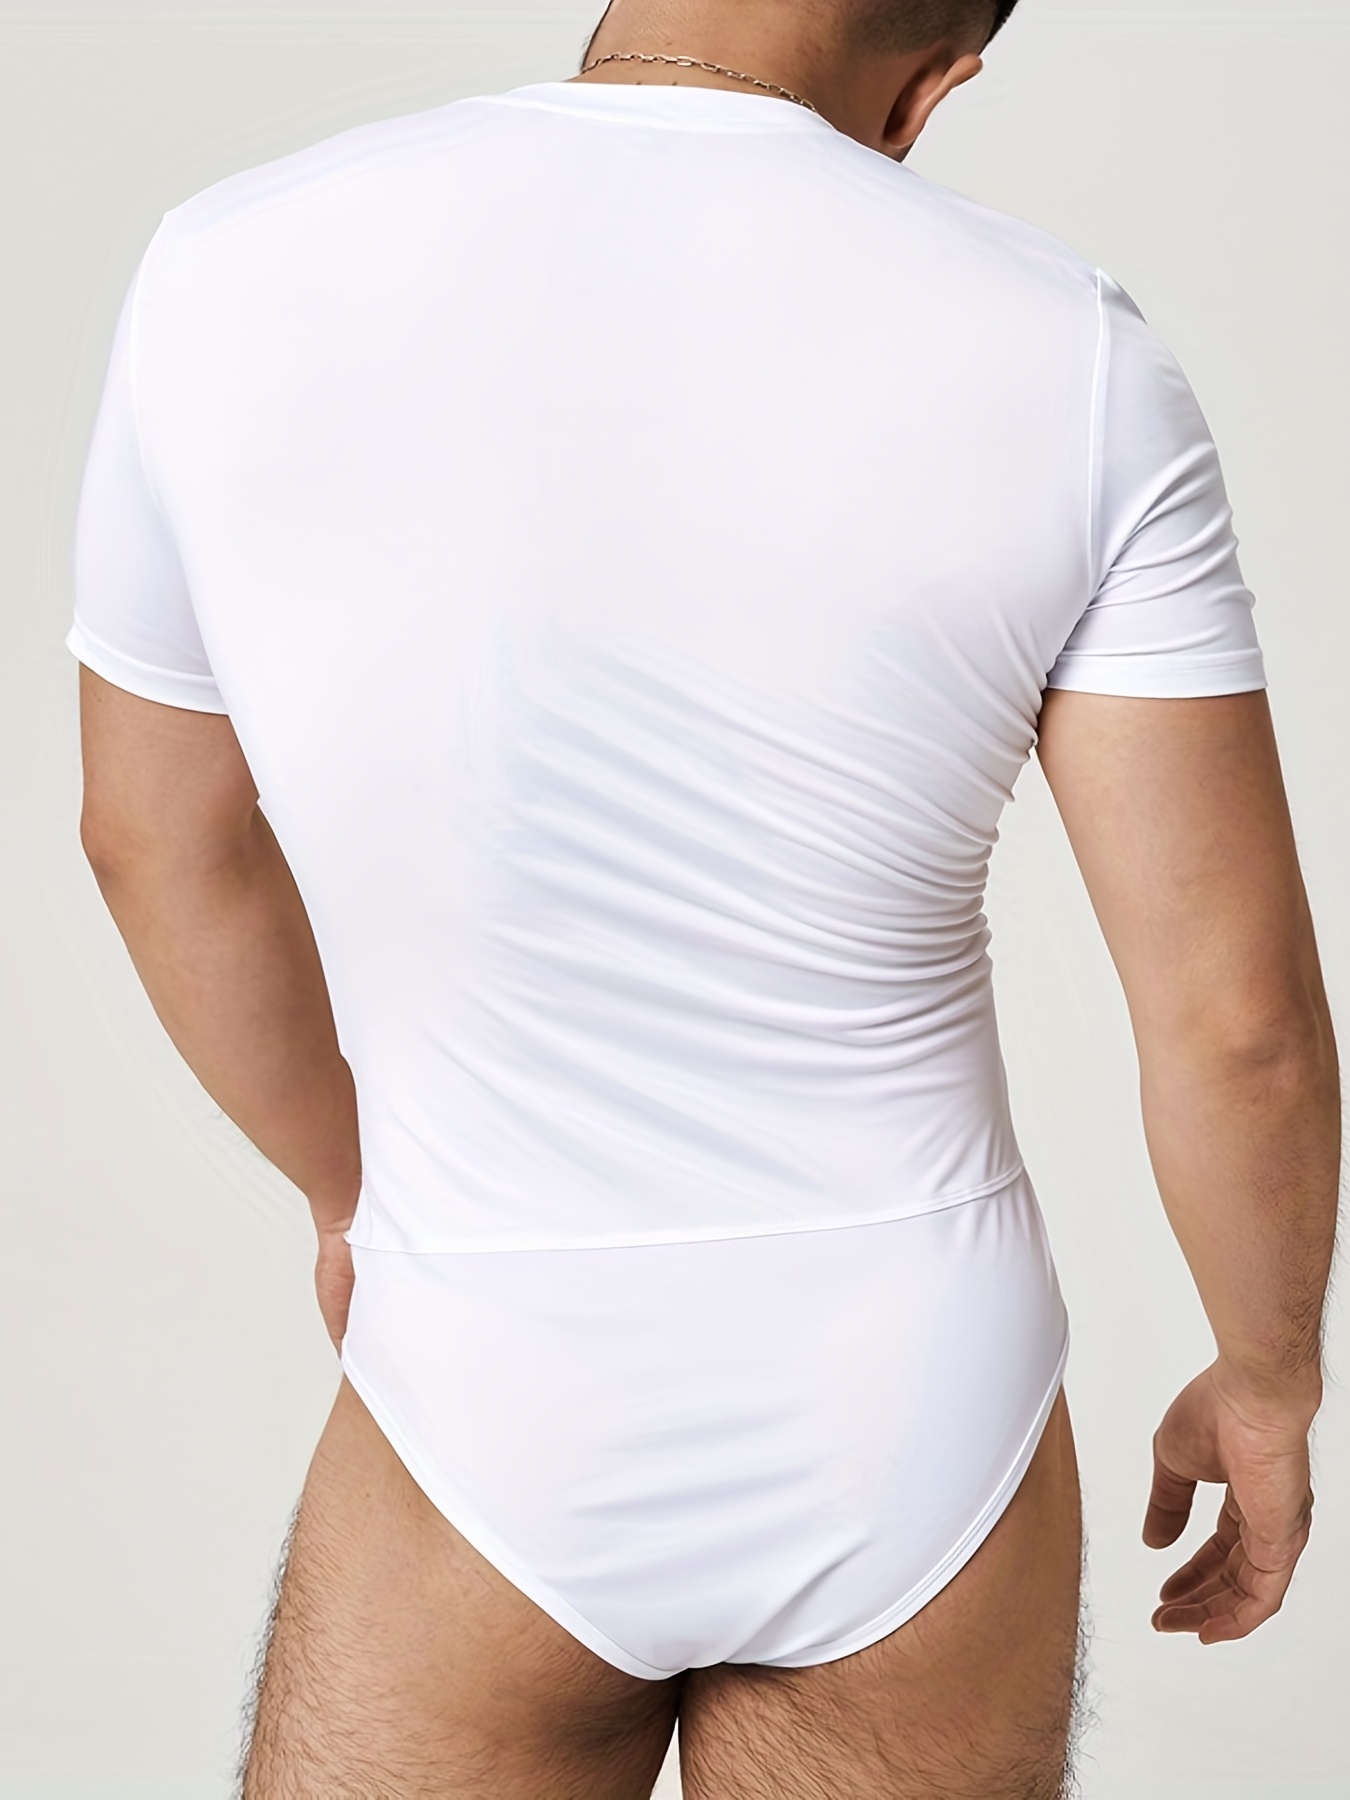 inhzoy Men's Short Sleeve Undershirt One Piece Leotard Top Press Button  Crotch Shirt Bodysuit Slim Fit Romper White XL 